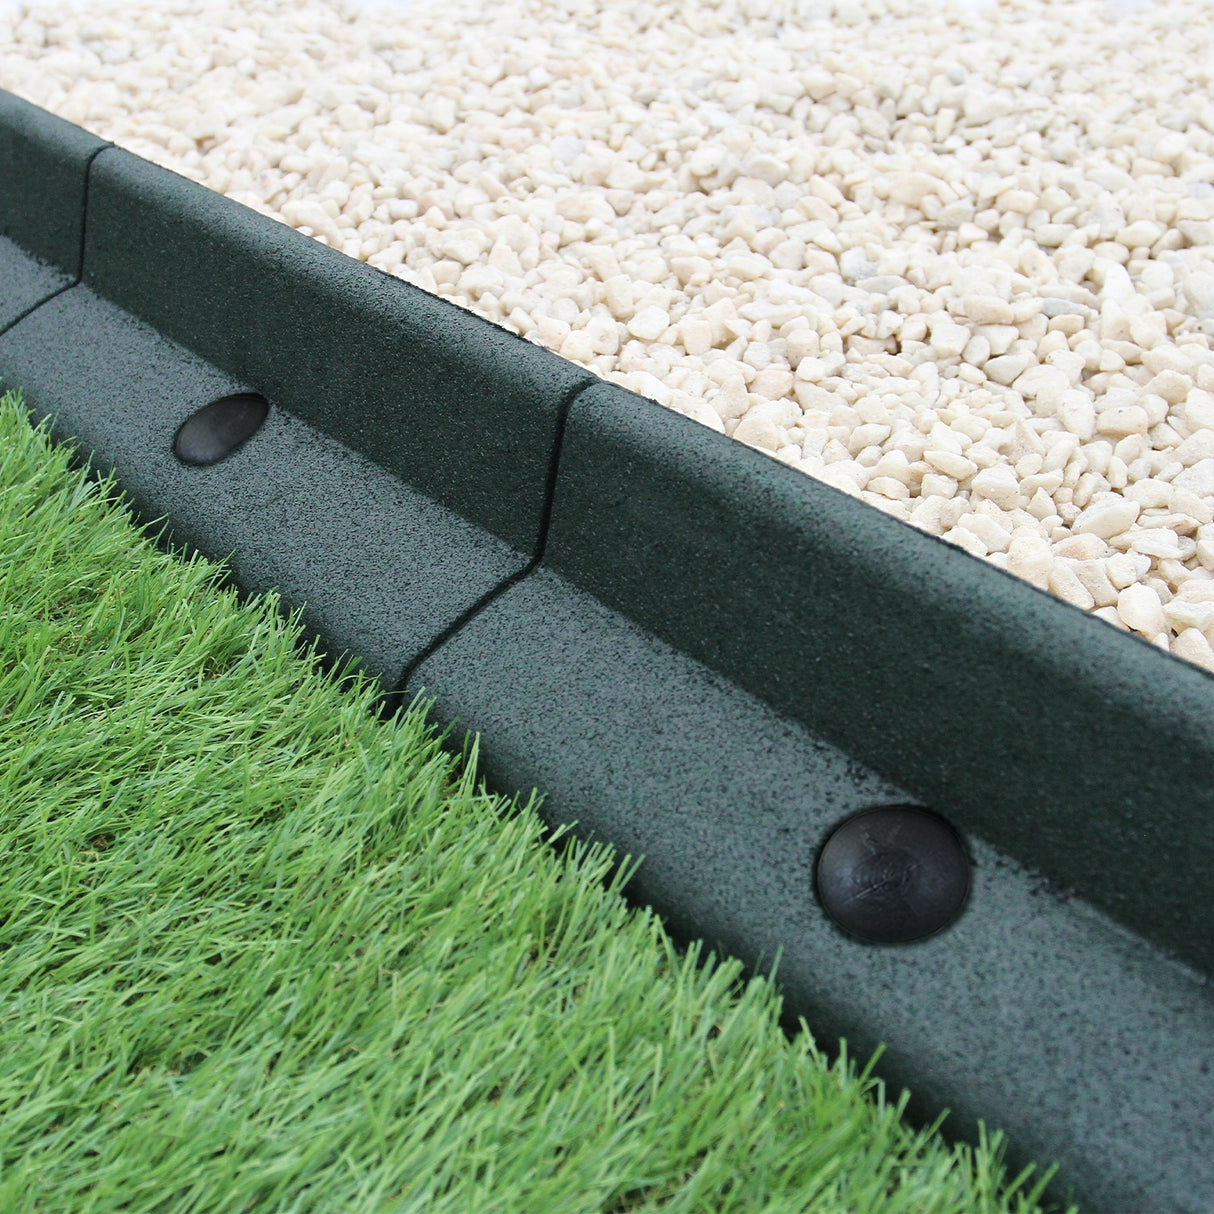 Flexible Lawn Edging Green 1.2m x 22 - Like New